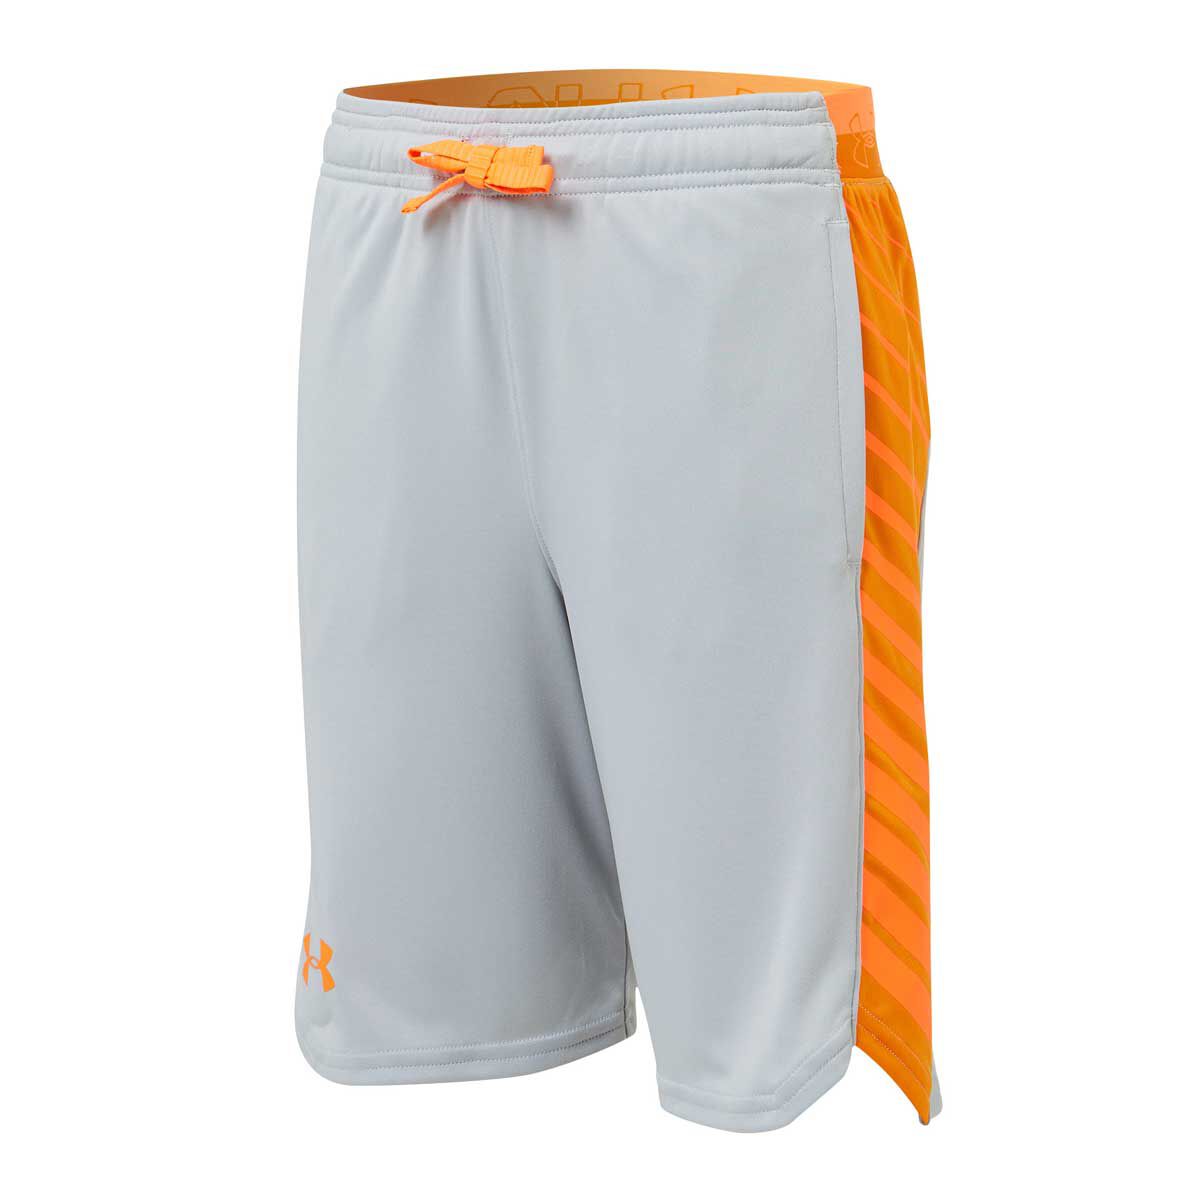 grey and orange under armour shorts